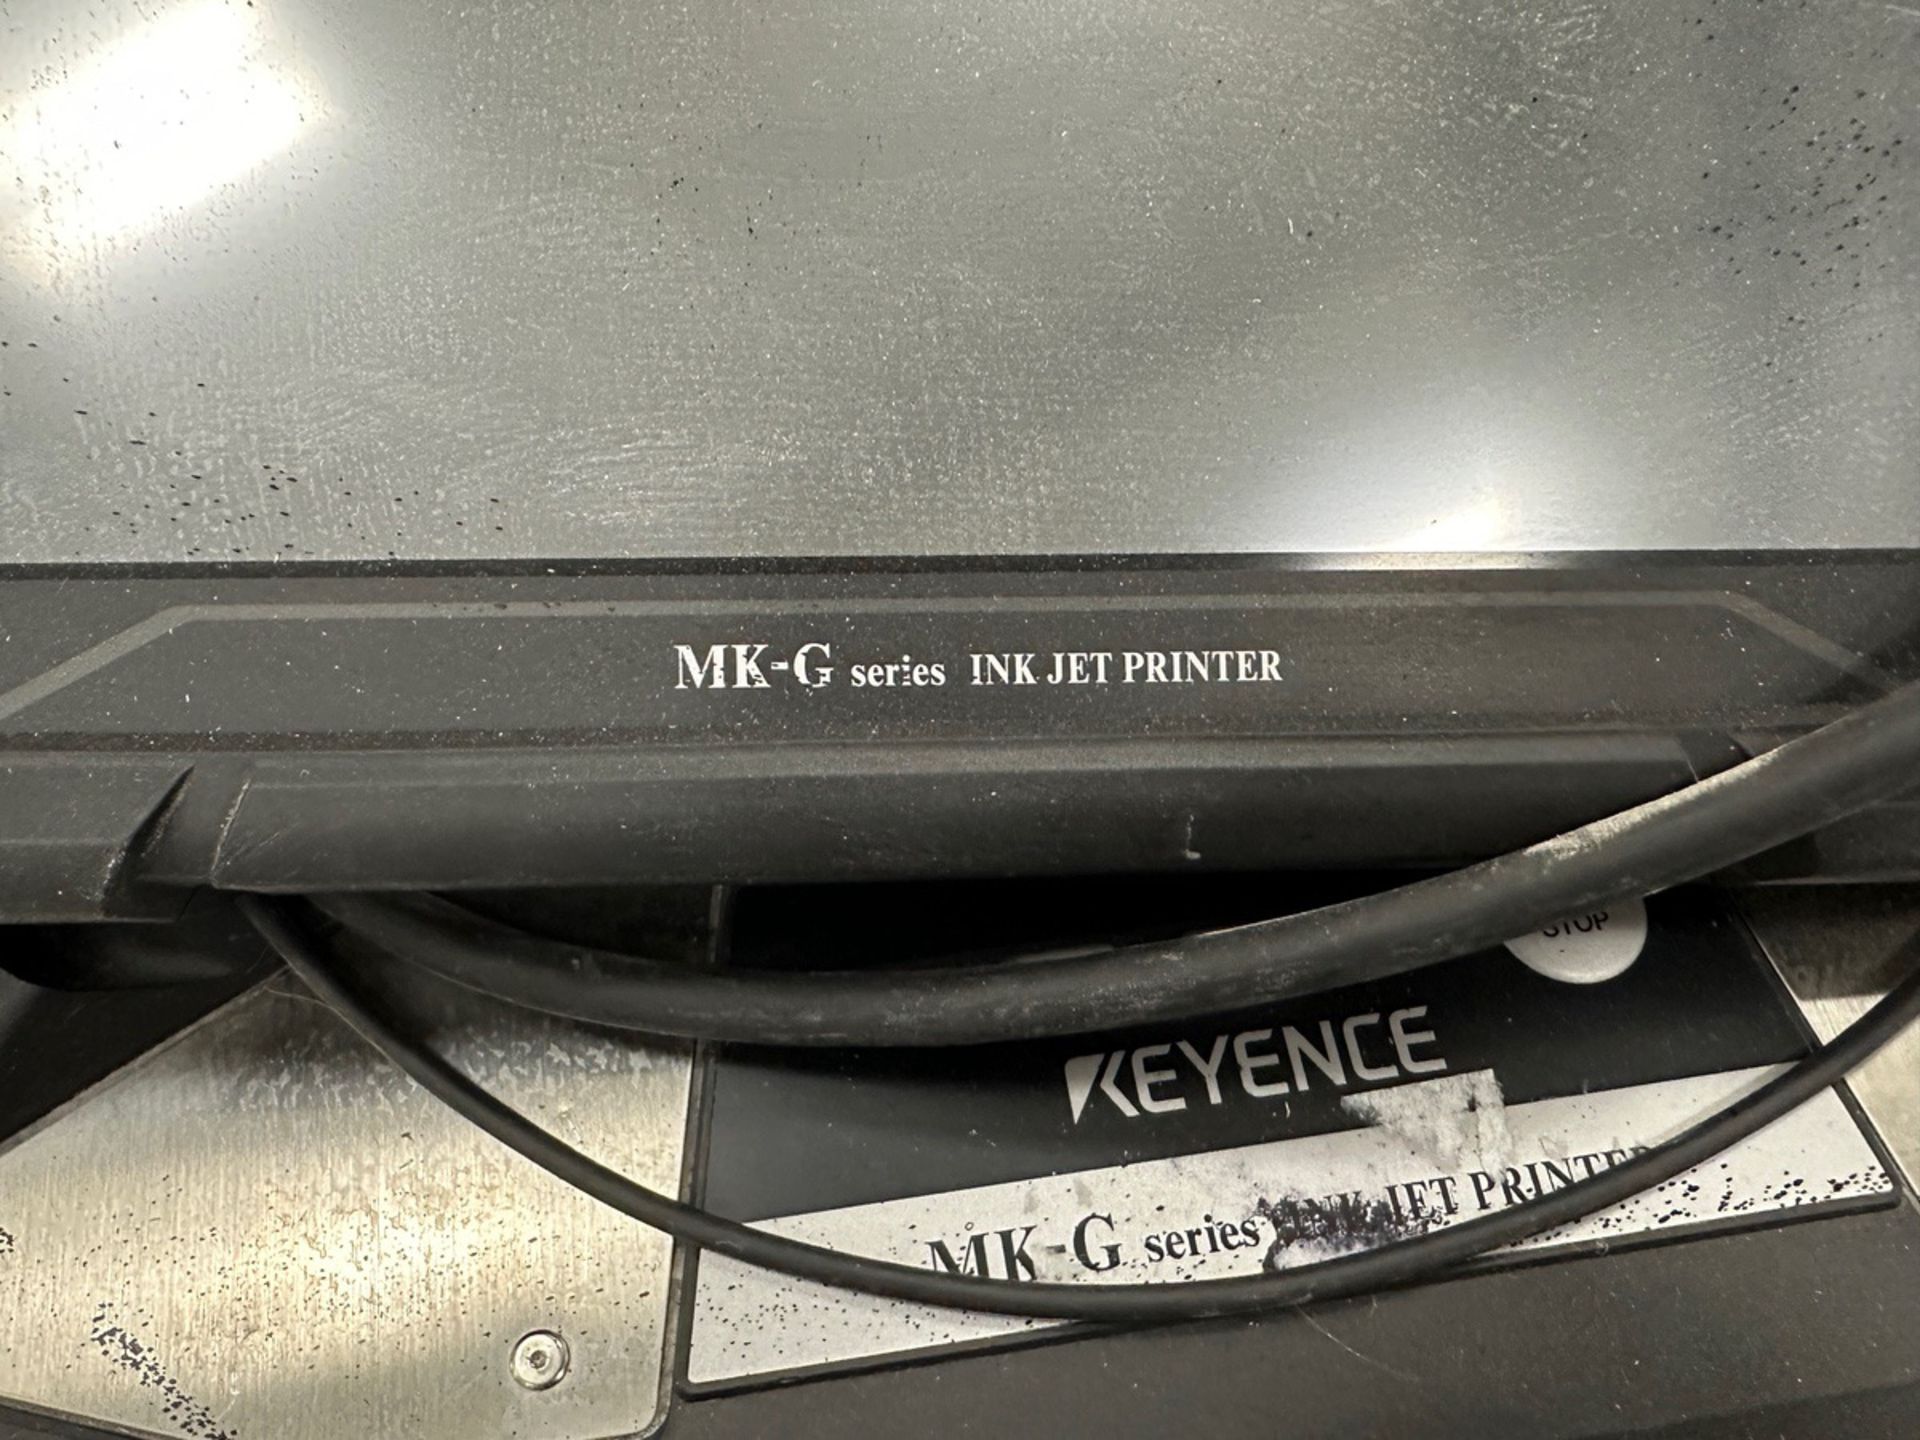 Keyence Model MK-G1000 Ink Jet Printer on Utility Cart | Rig Fee $20 - Image 2 of 3